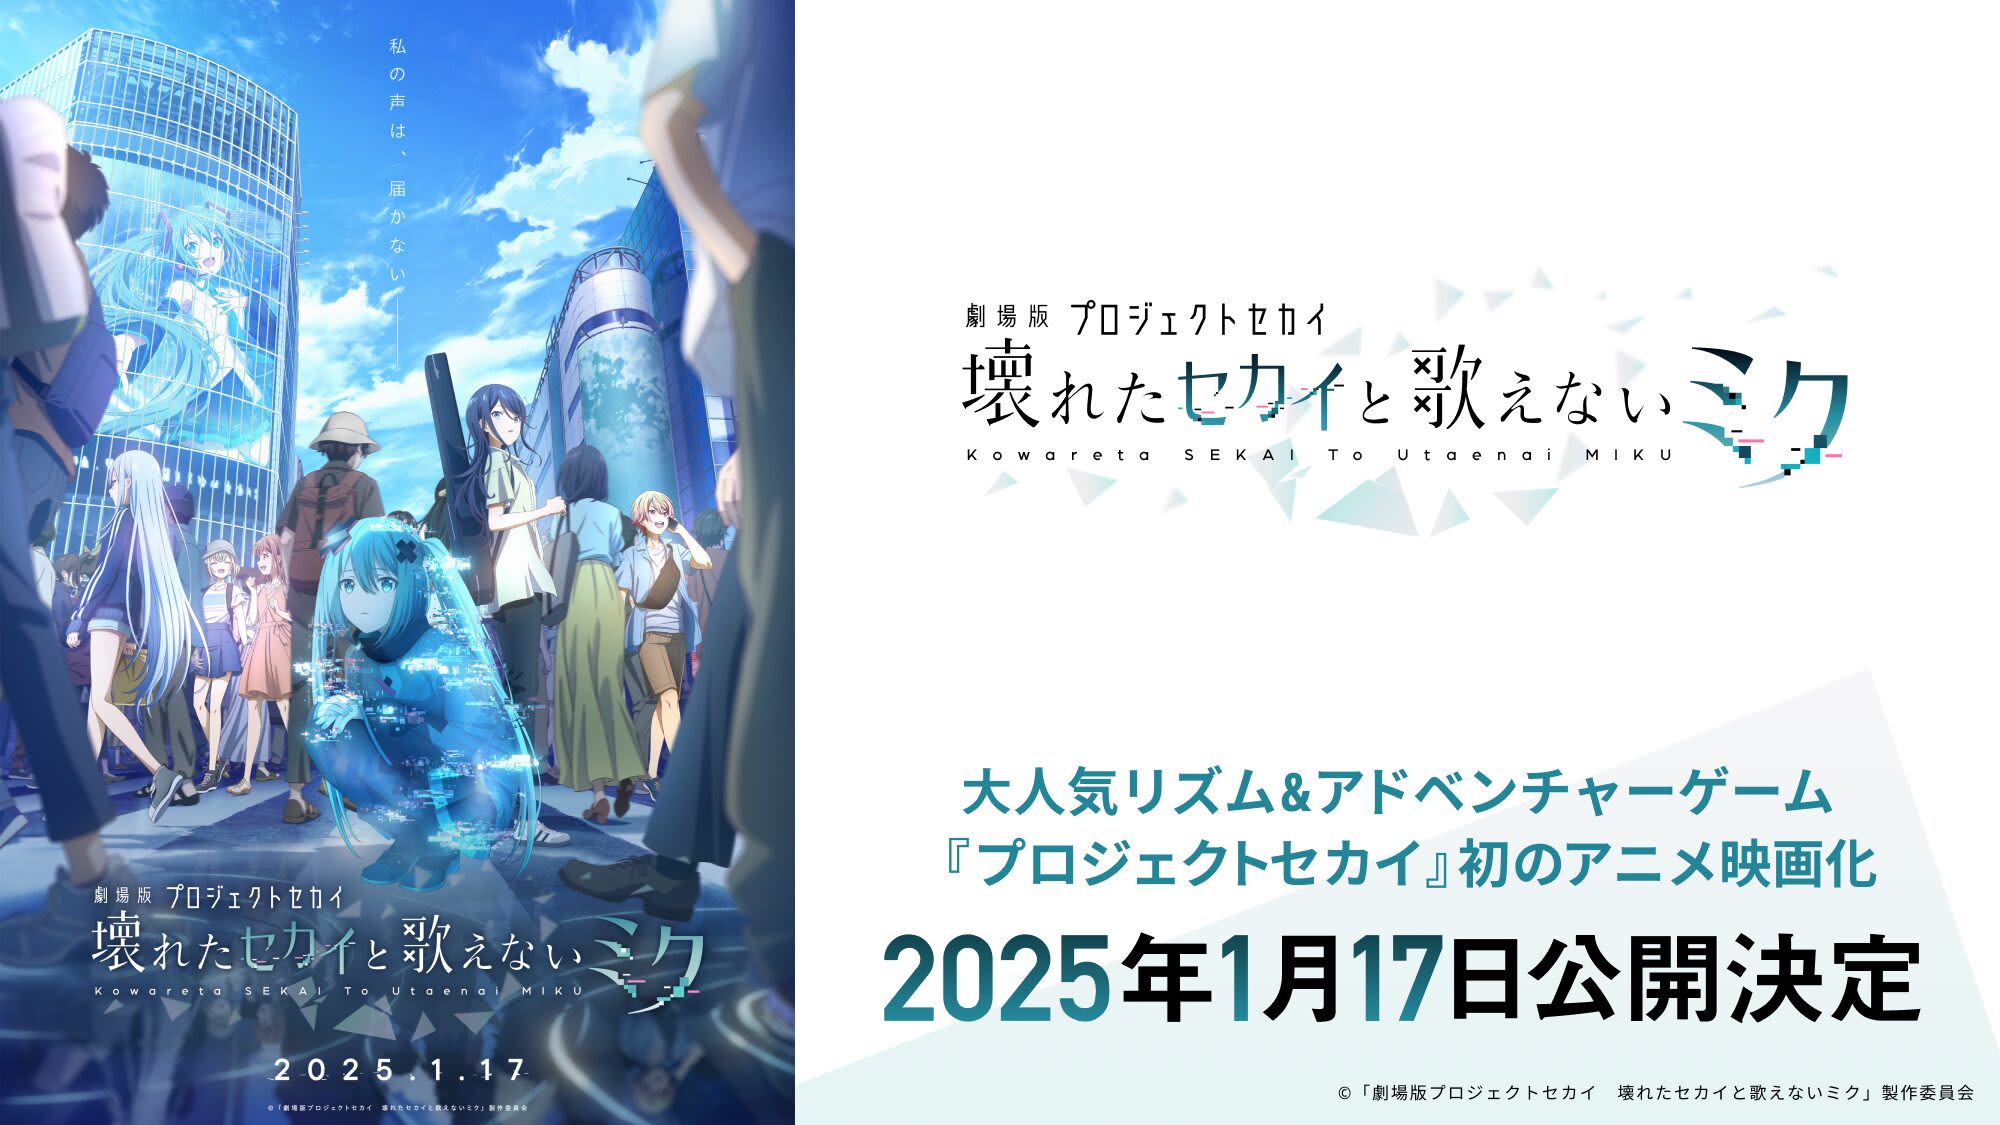 Hatsune Miku: COLORFUL STAGE! anime movie Project SEKAI the Movie: Kowareta SEKAI to Utaenai MIKU announced